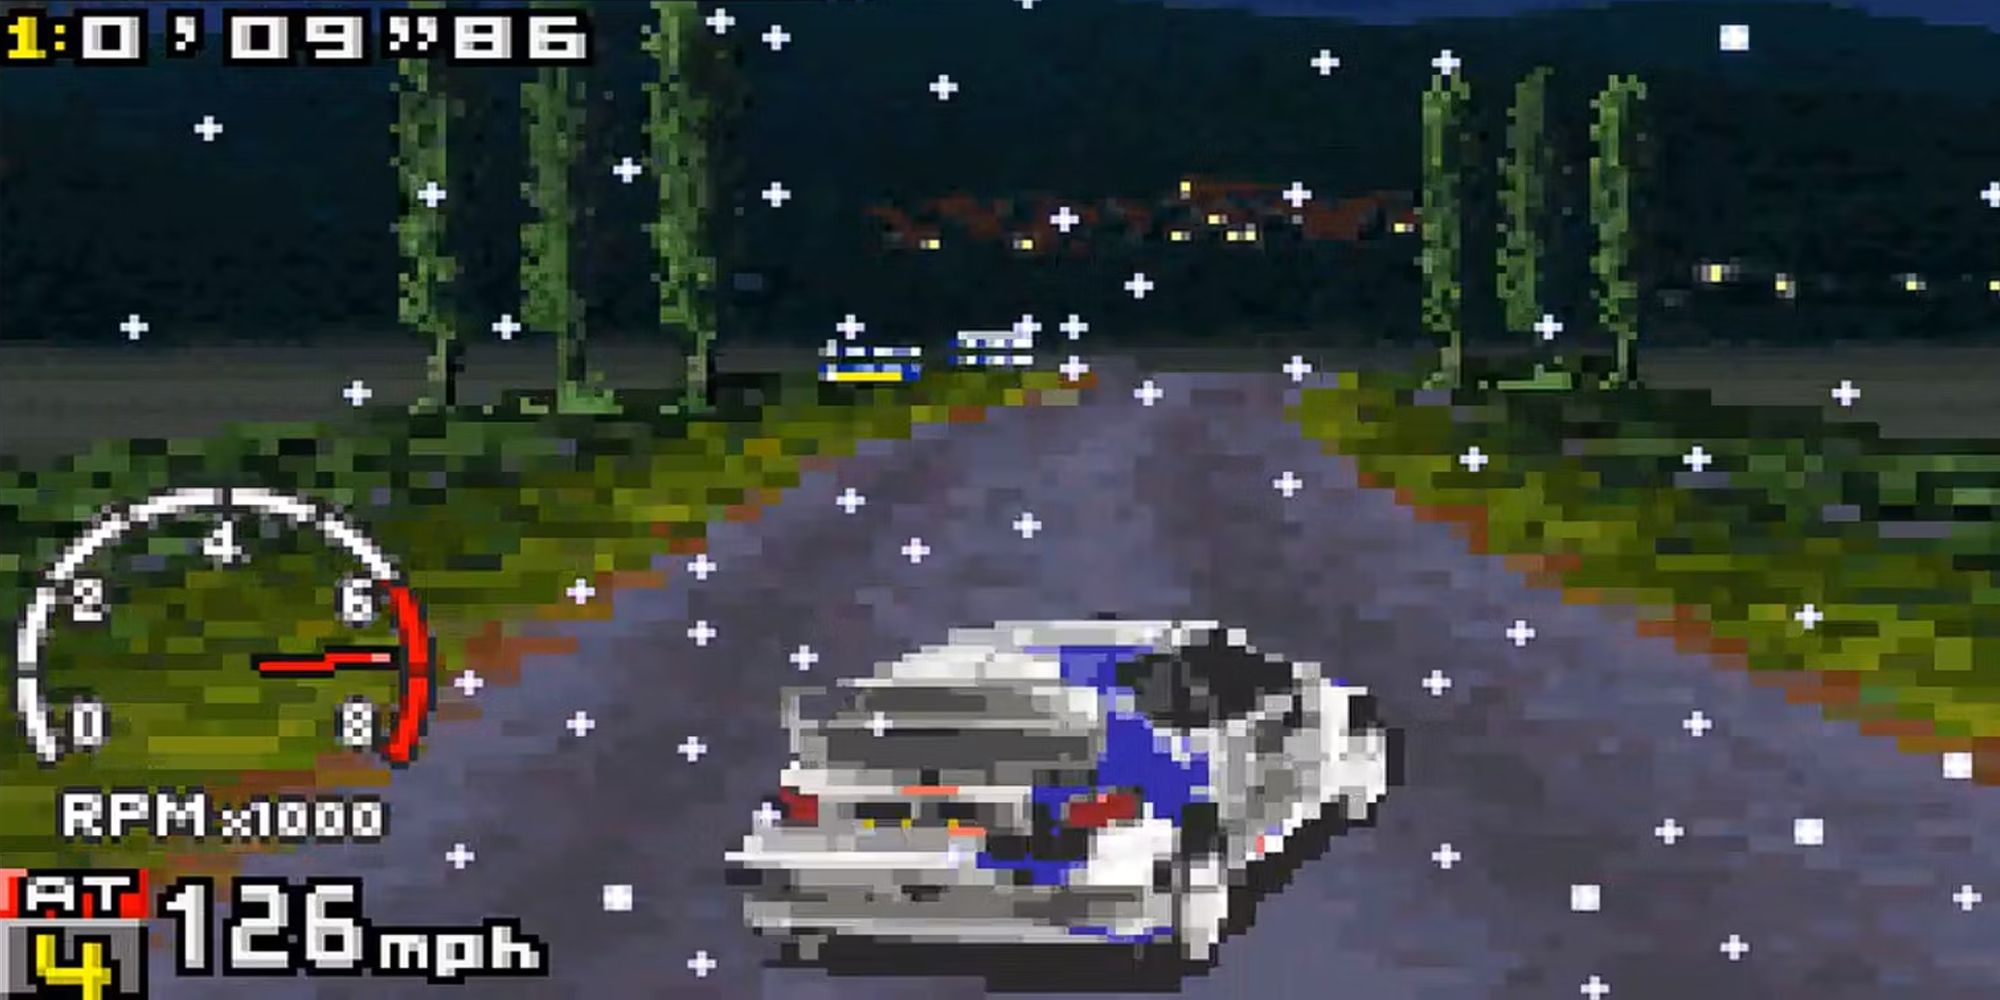 Sega Rally Championship GameBoy Advance